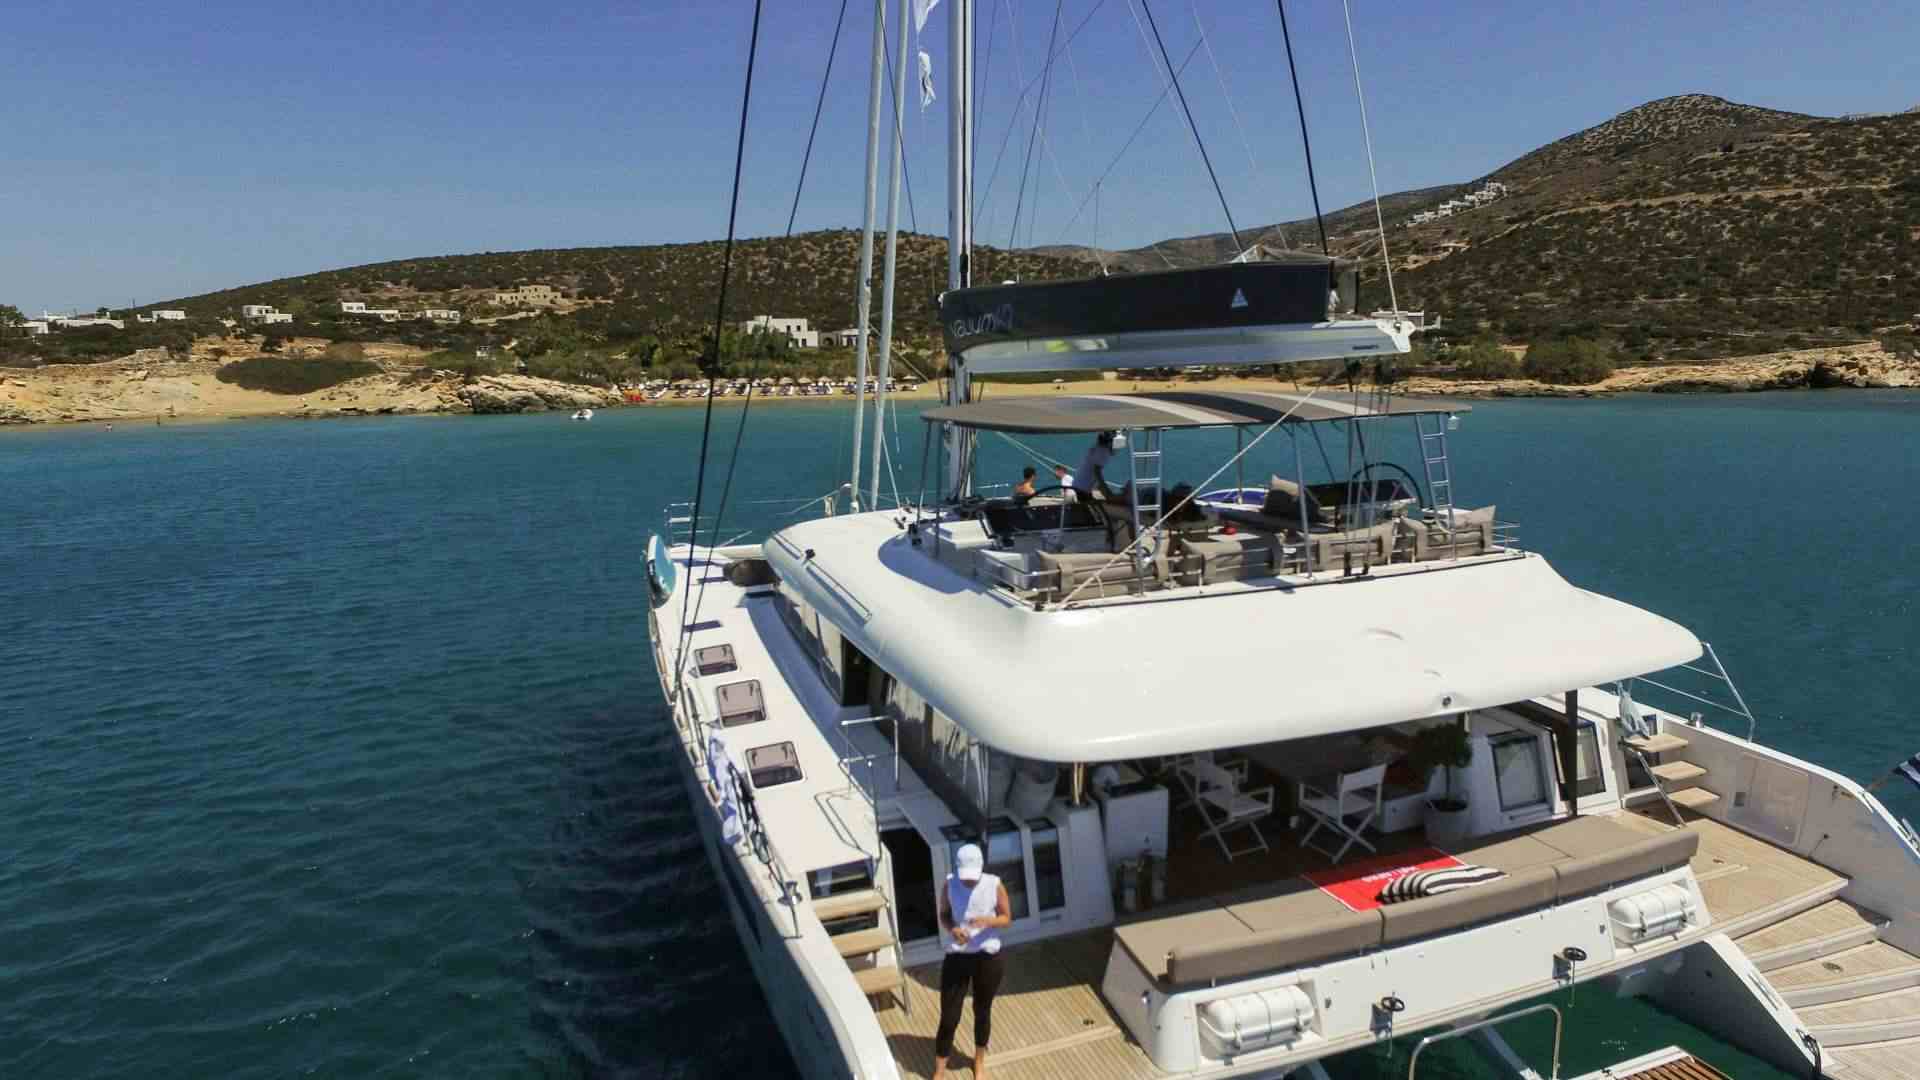 valium62 - Yacht Charter Lefkada & Boat hire in Greece 1